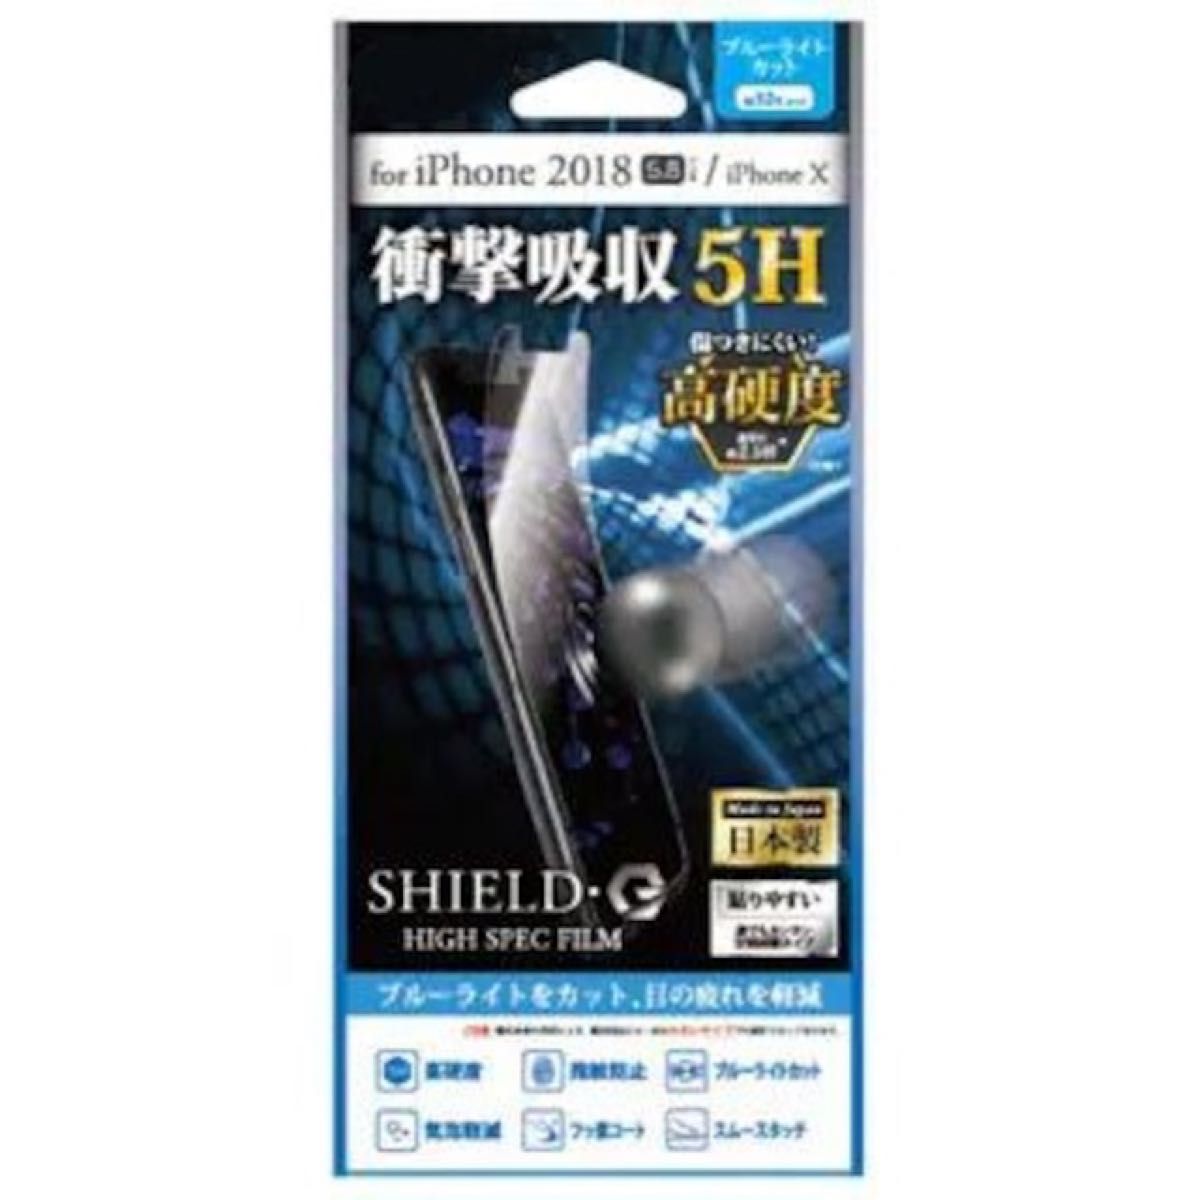 iPhone X XS 11Pro 保護フィルム SHIELD・G HIGH SPEC FILM 高光沢 高硬度 5H 